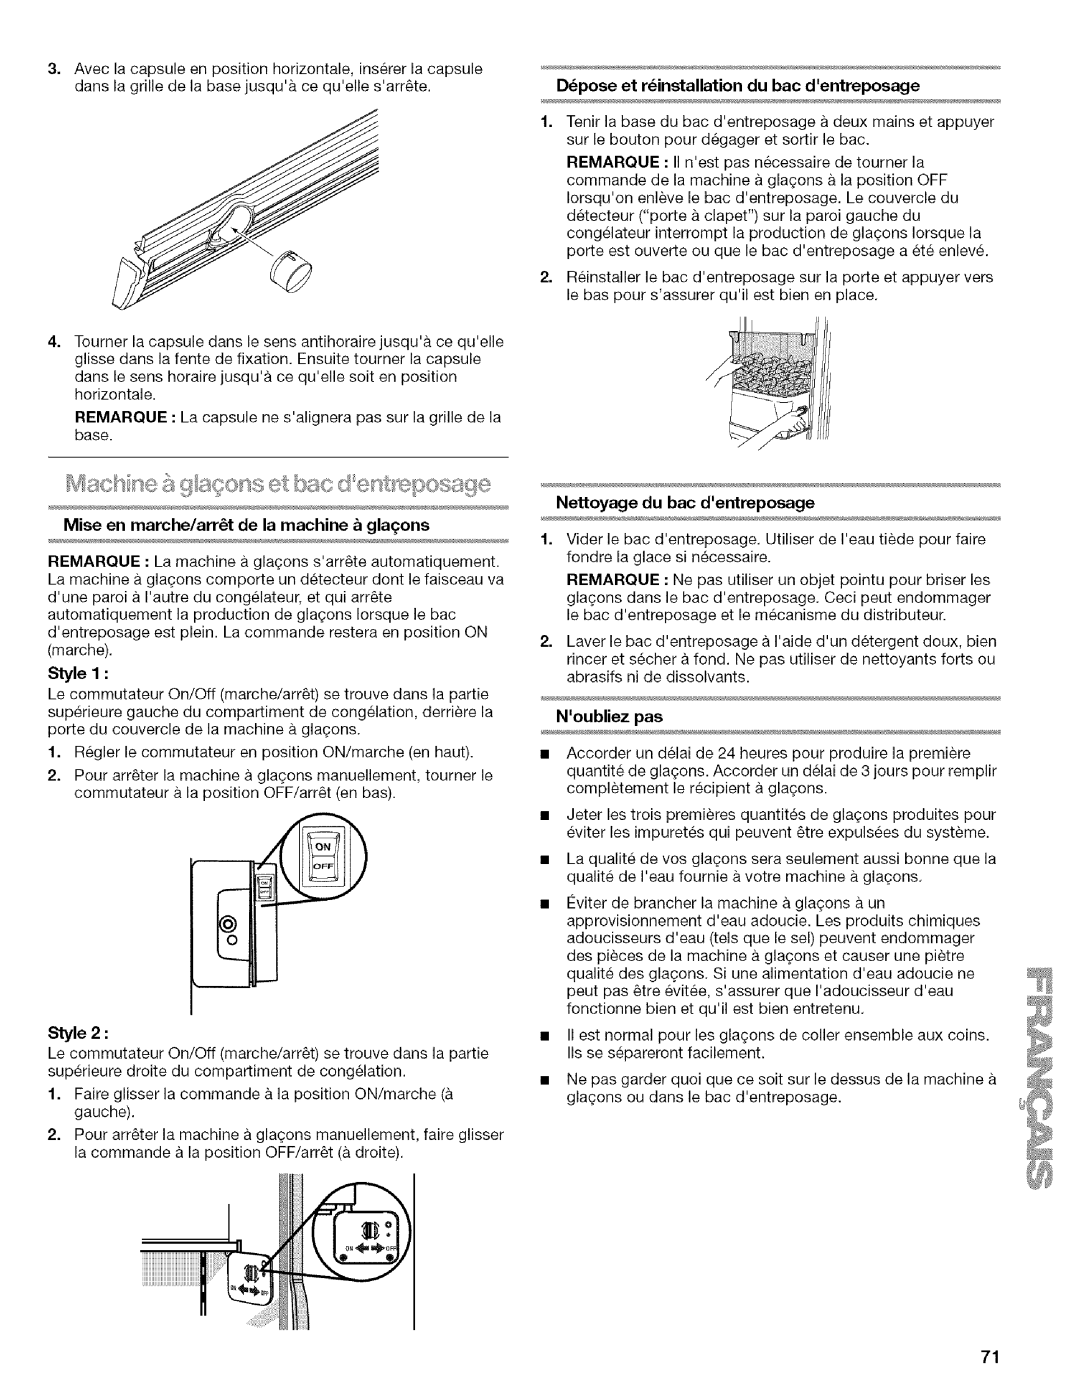 Kenmore 2318589 manual D_pose et r_installation du bac dentreposage, Nettoyage du bac dentreposage, Noubliezpas, Style 